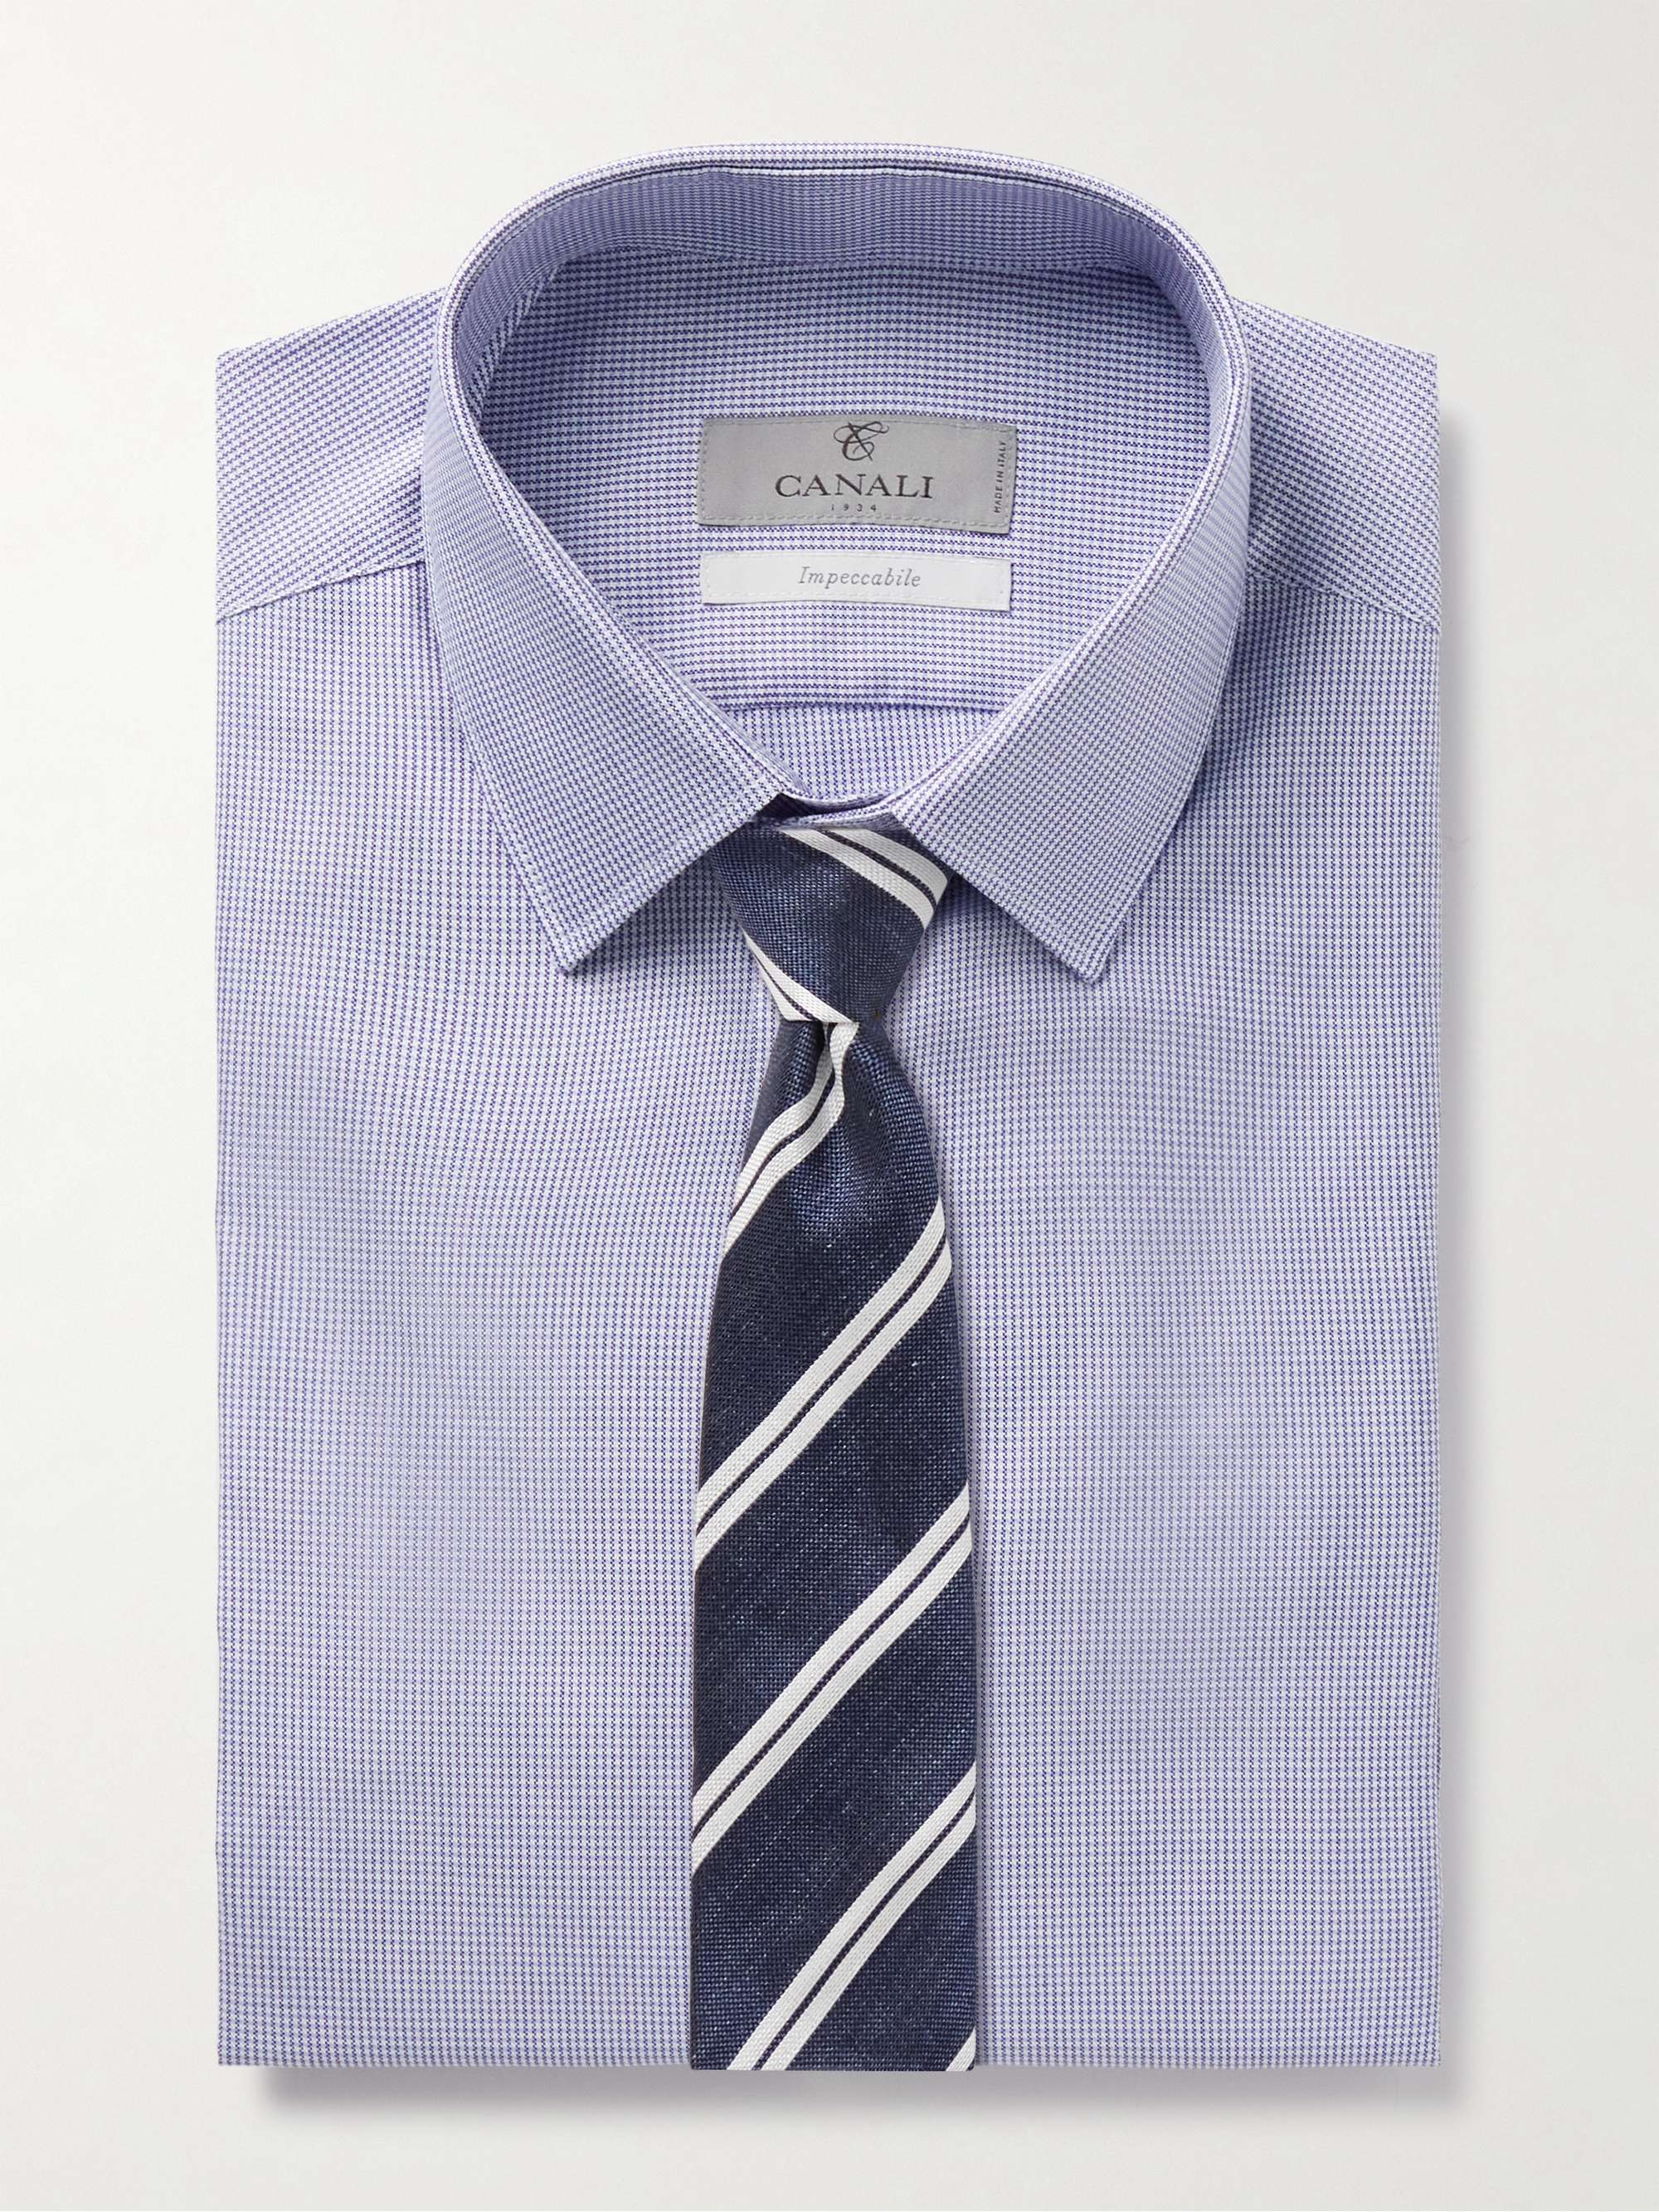 Blue Slim-Fit Puppytooth Impeccabile Cotton Shirt | CANALI | MR PORTER